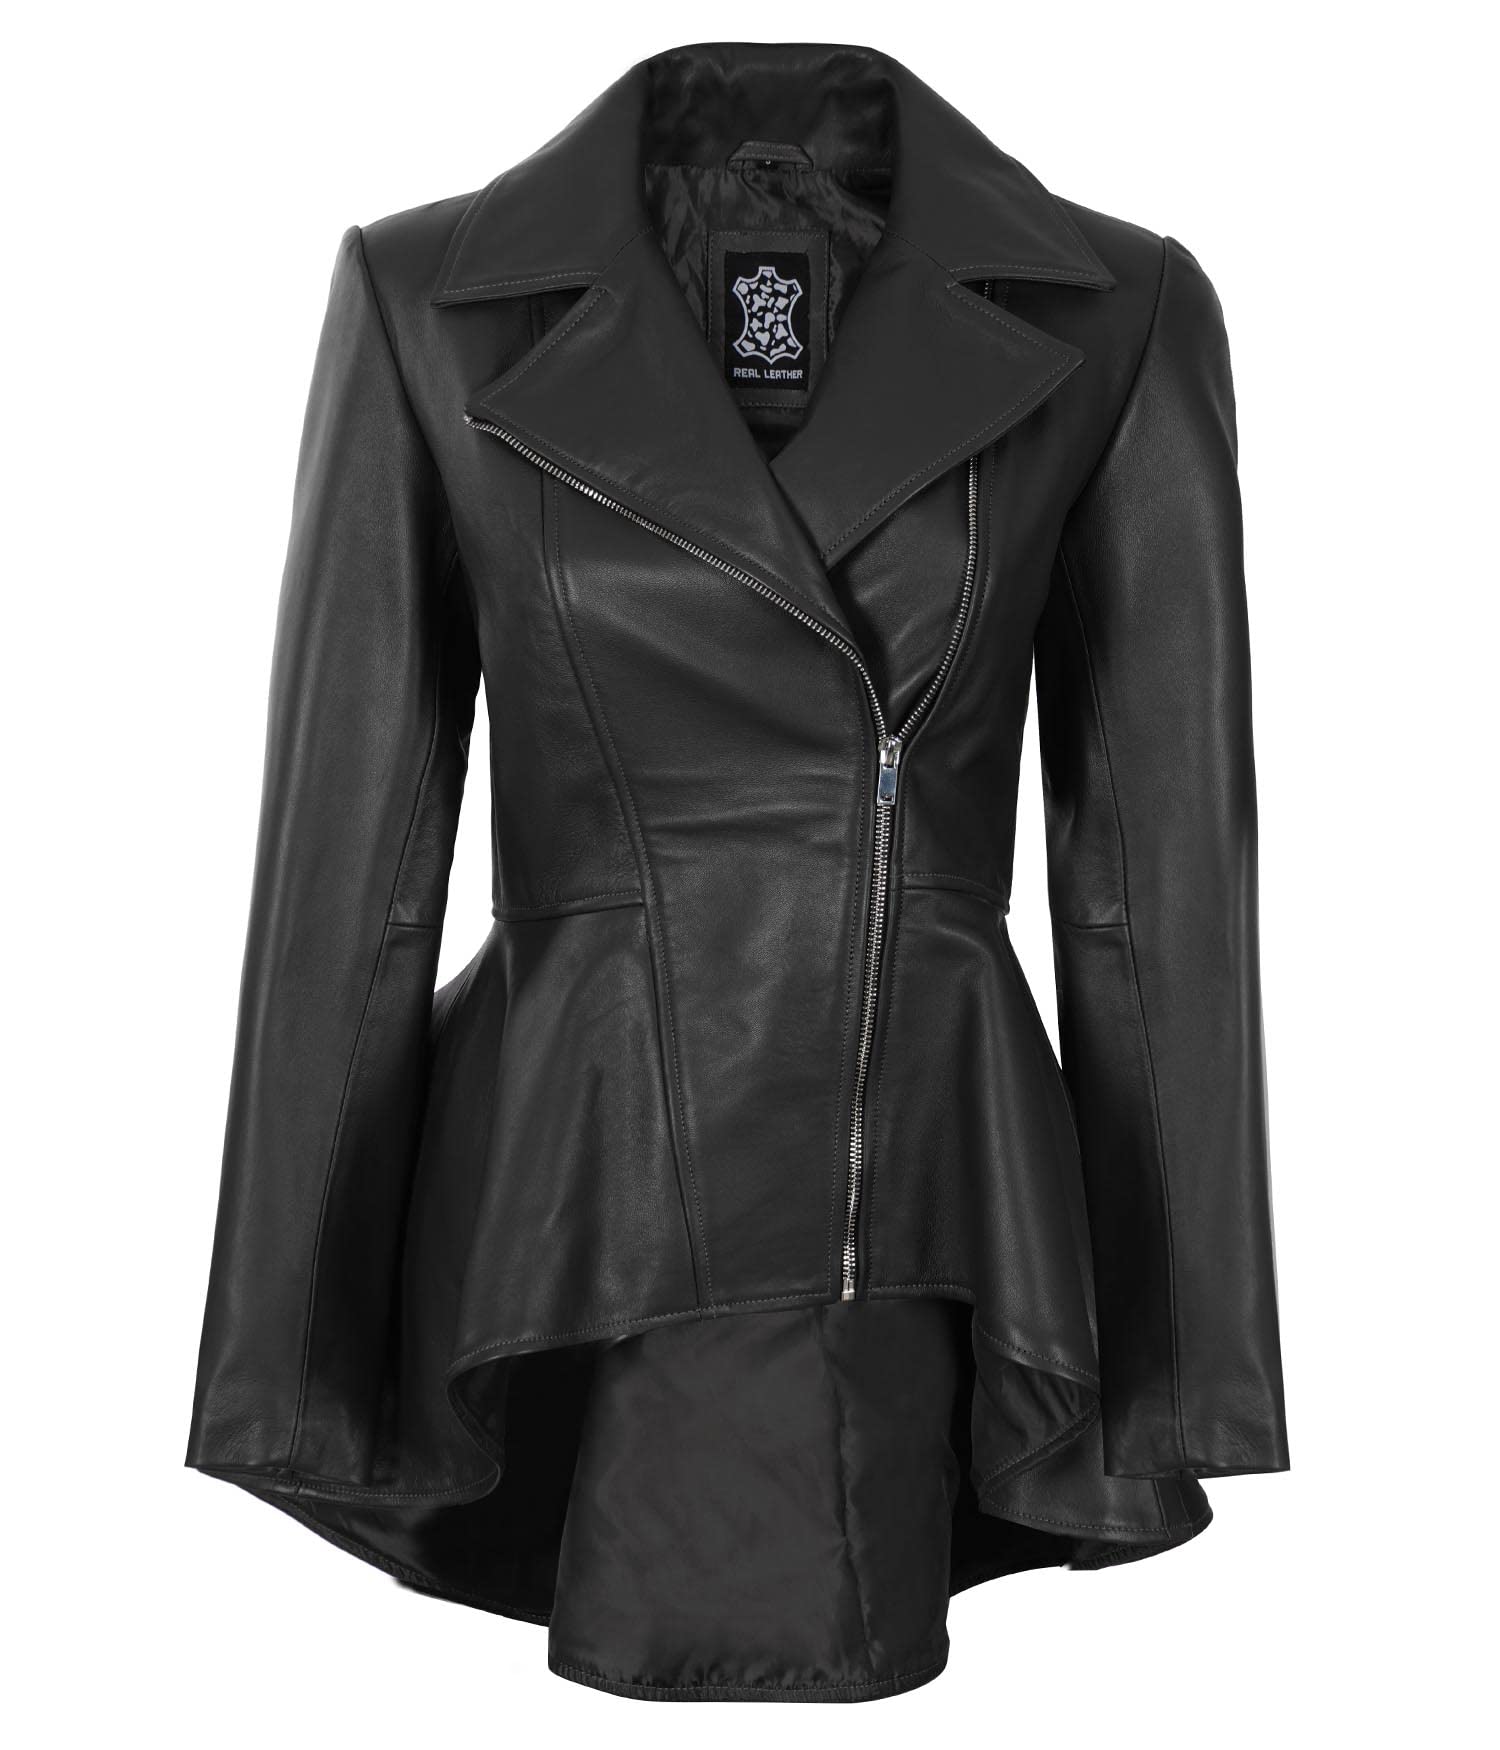 Decrum Peplum Leather Jacket Women - Casual Stylish Fashionable 100% Real Leather Jackets For Womens